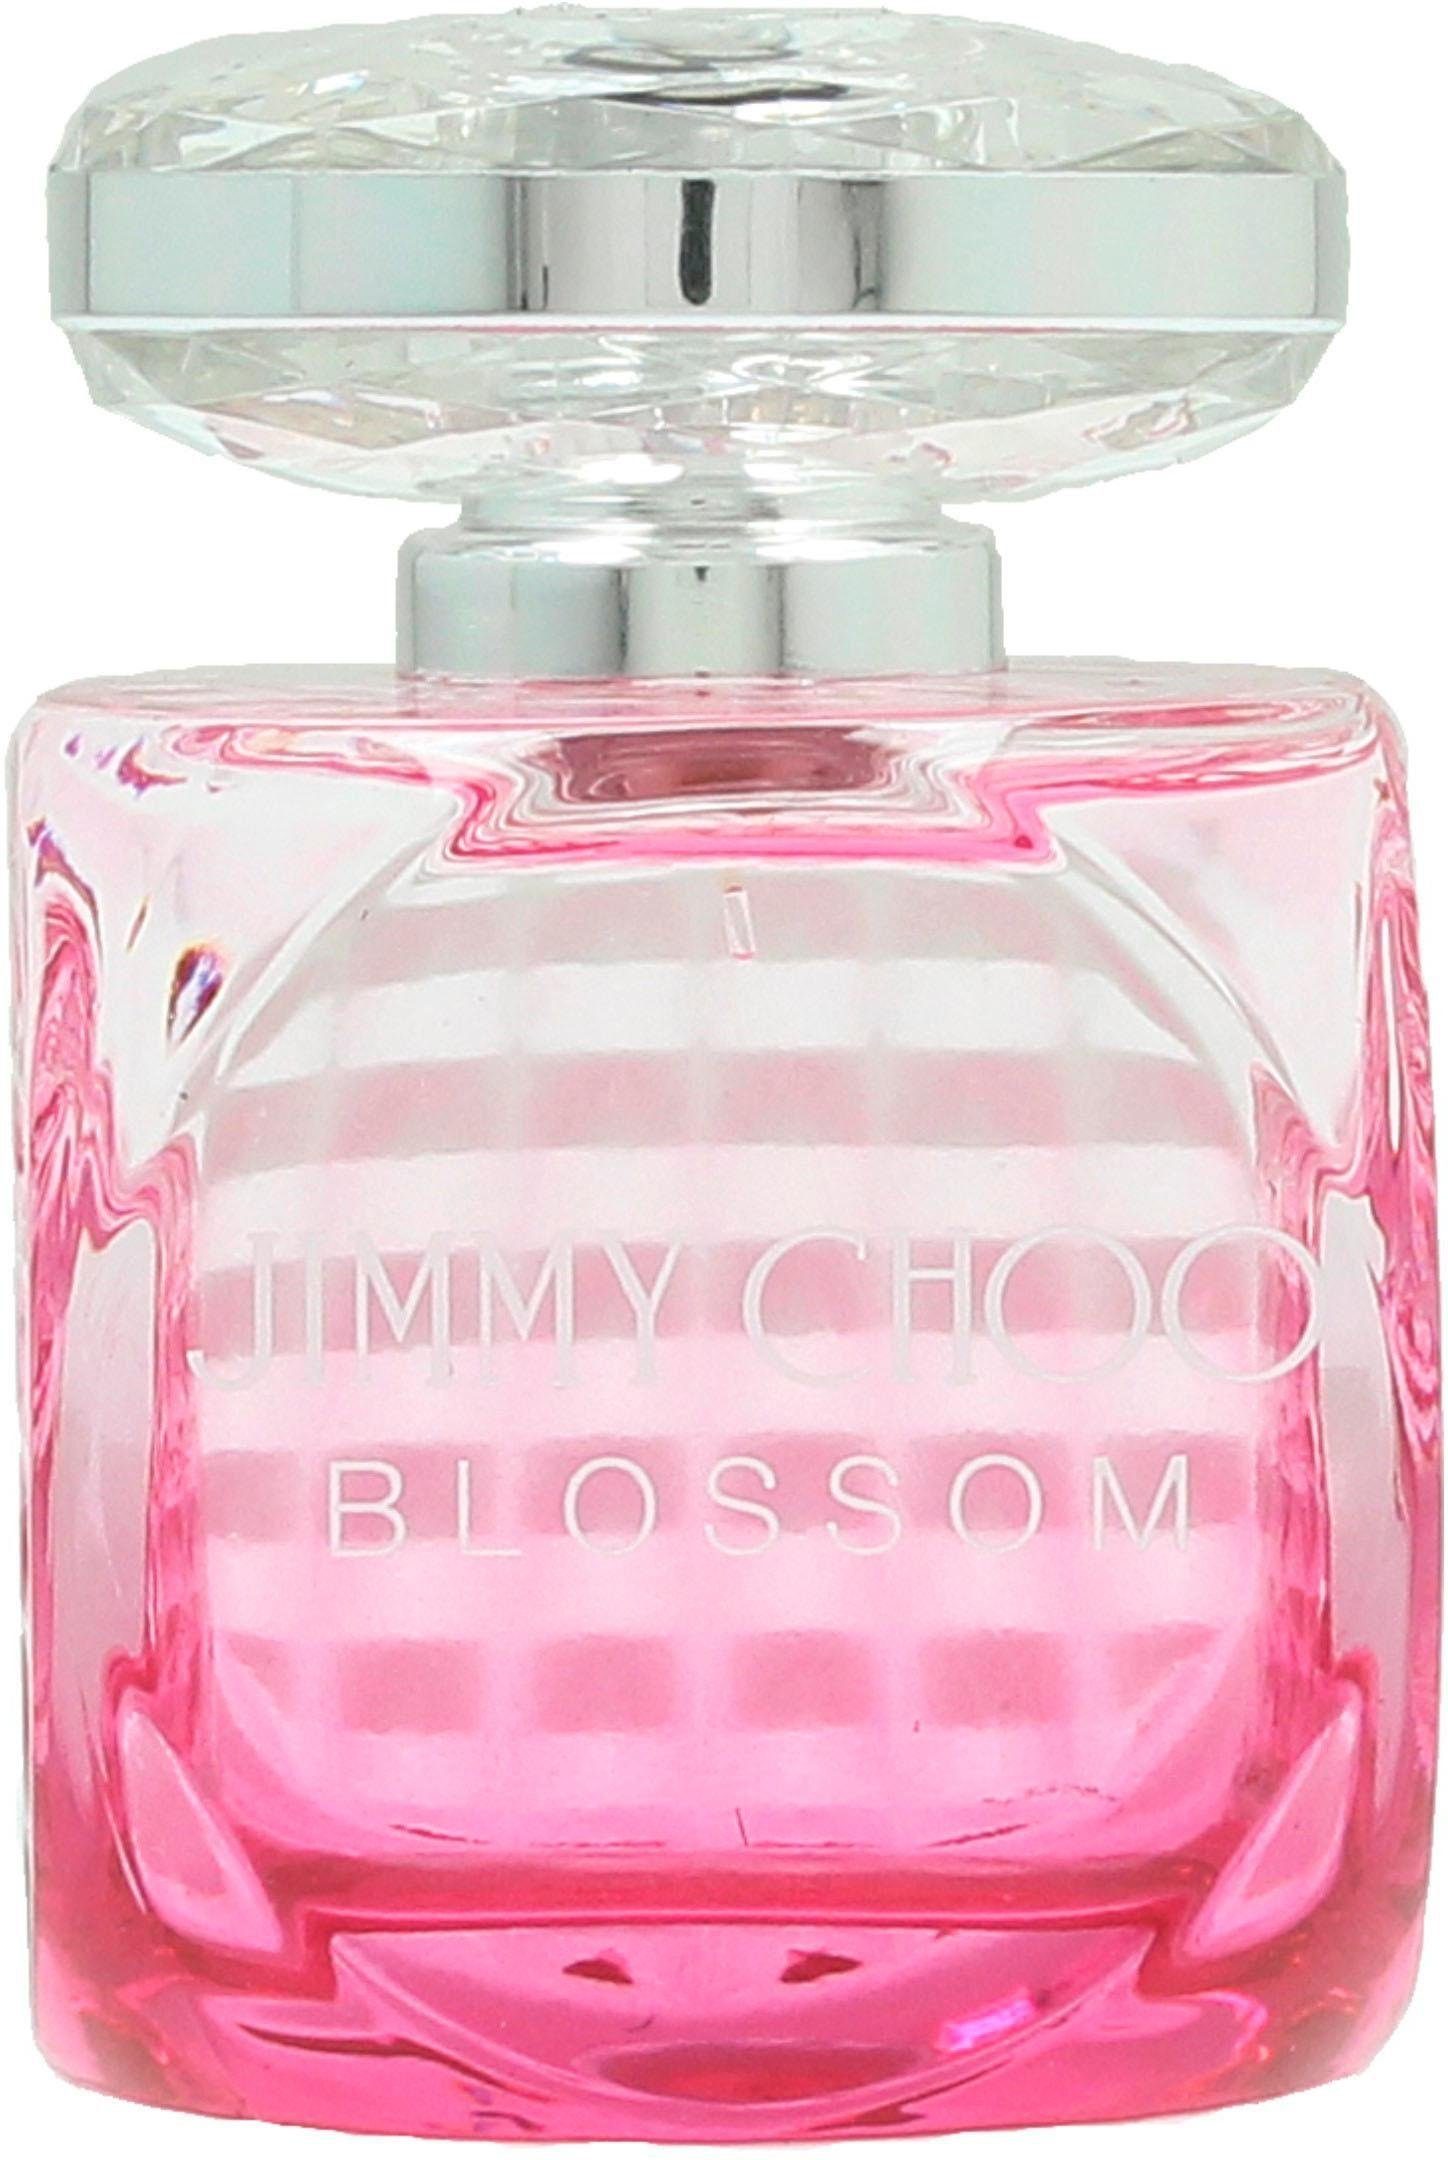 JIMMY Parfum Blossom CHOO de Eau